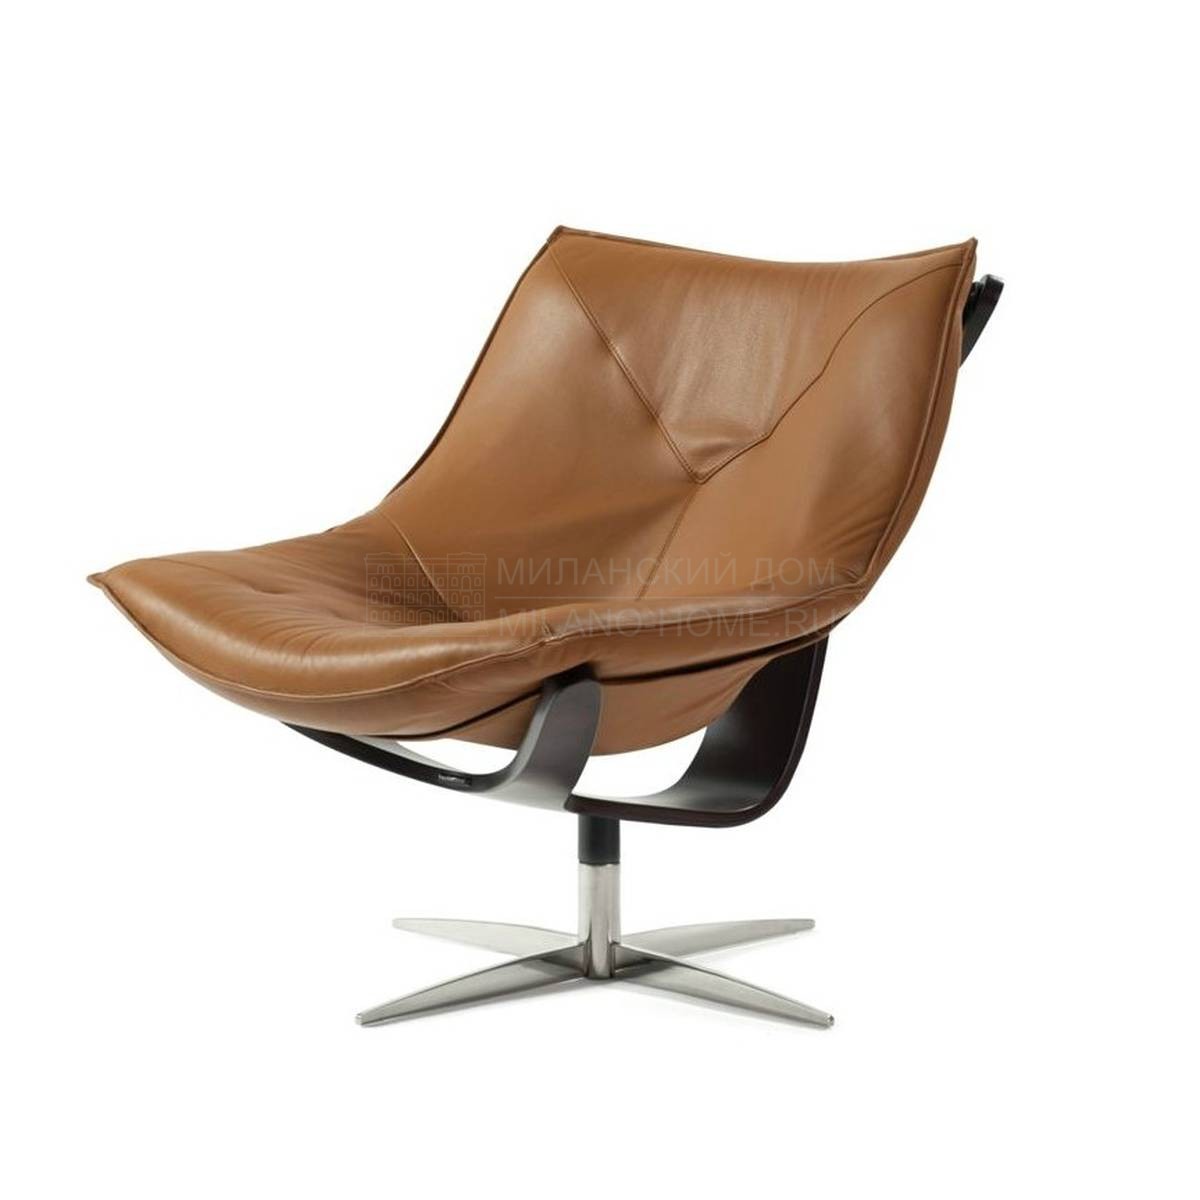 Кожаное кресло Dolphin armchair из Франции фабрики ROCHE BOBOIS